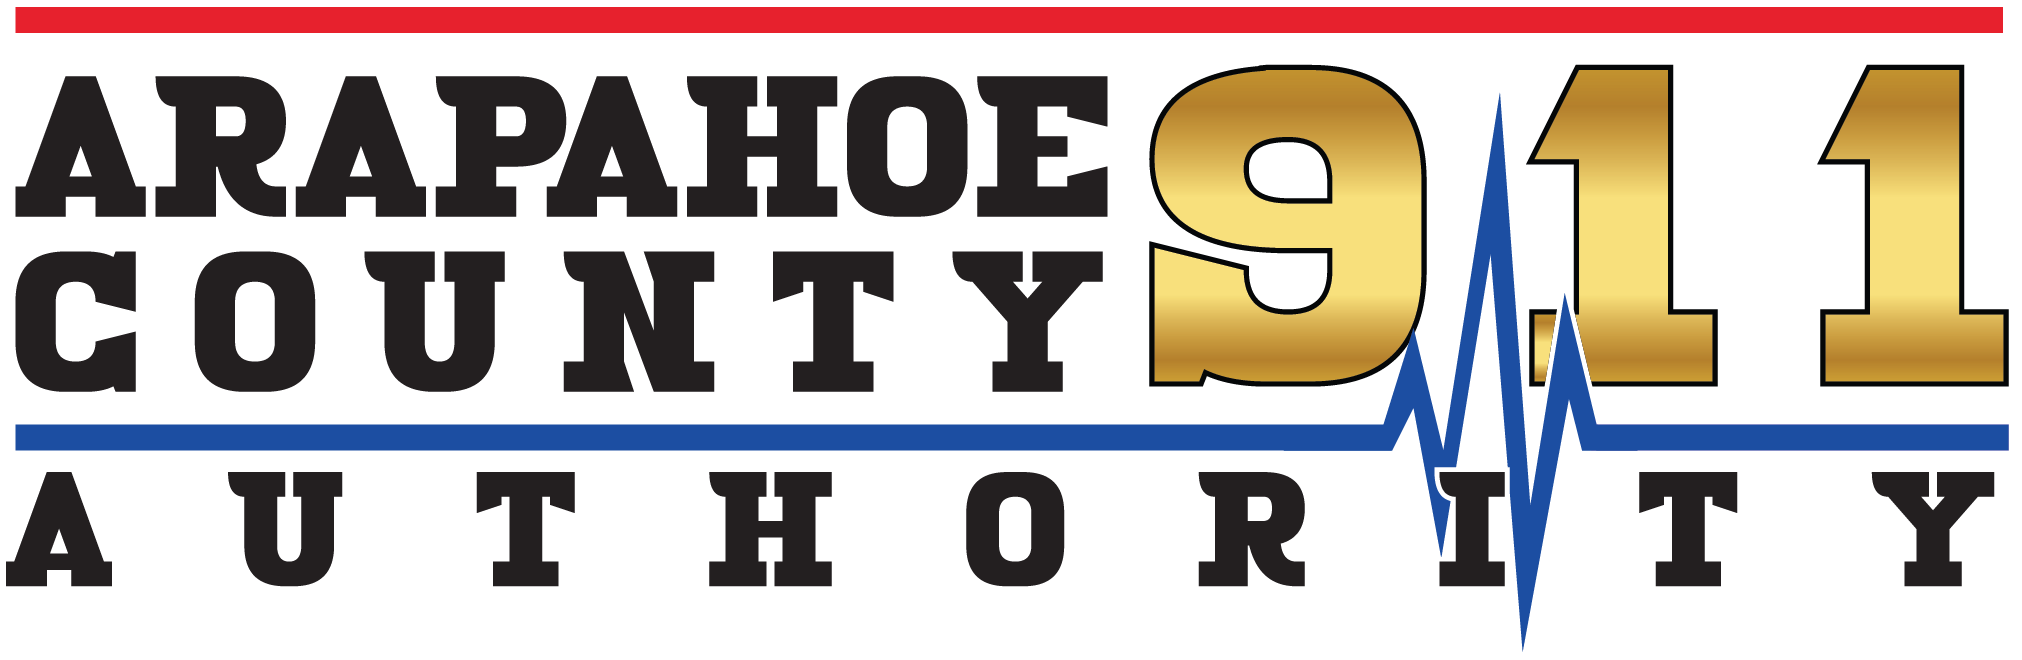 Arapahoe County 9-1-1 Authority Logo